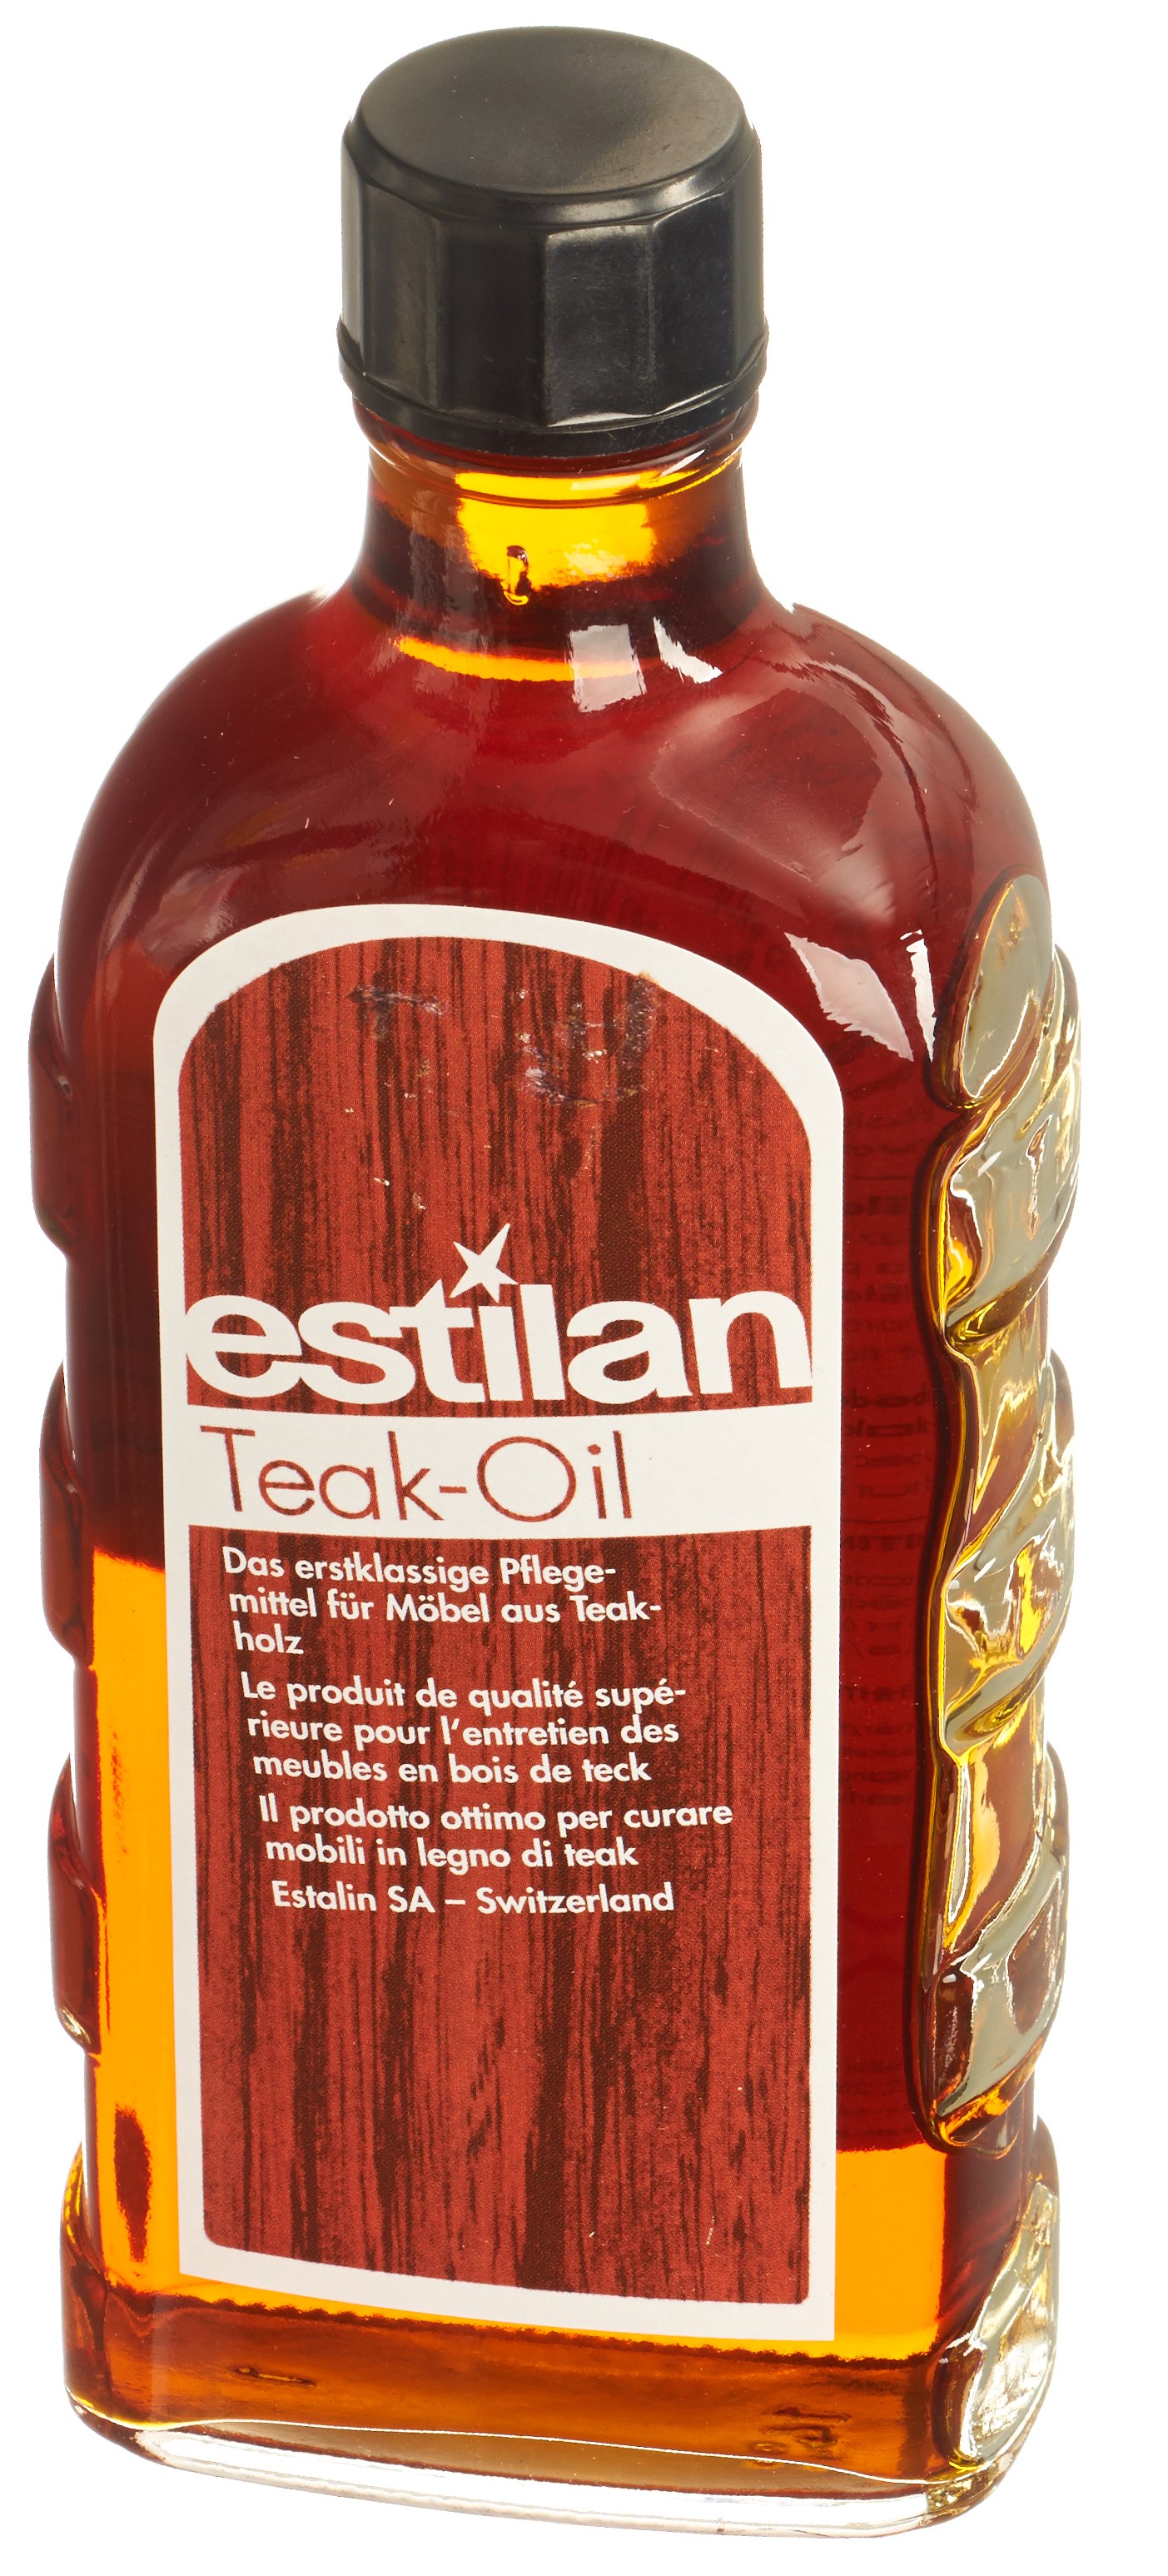 teak oil